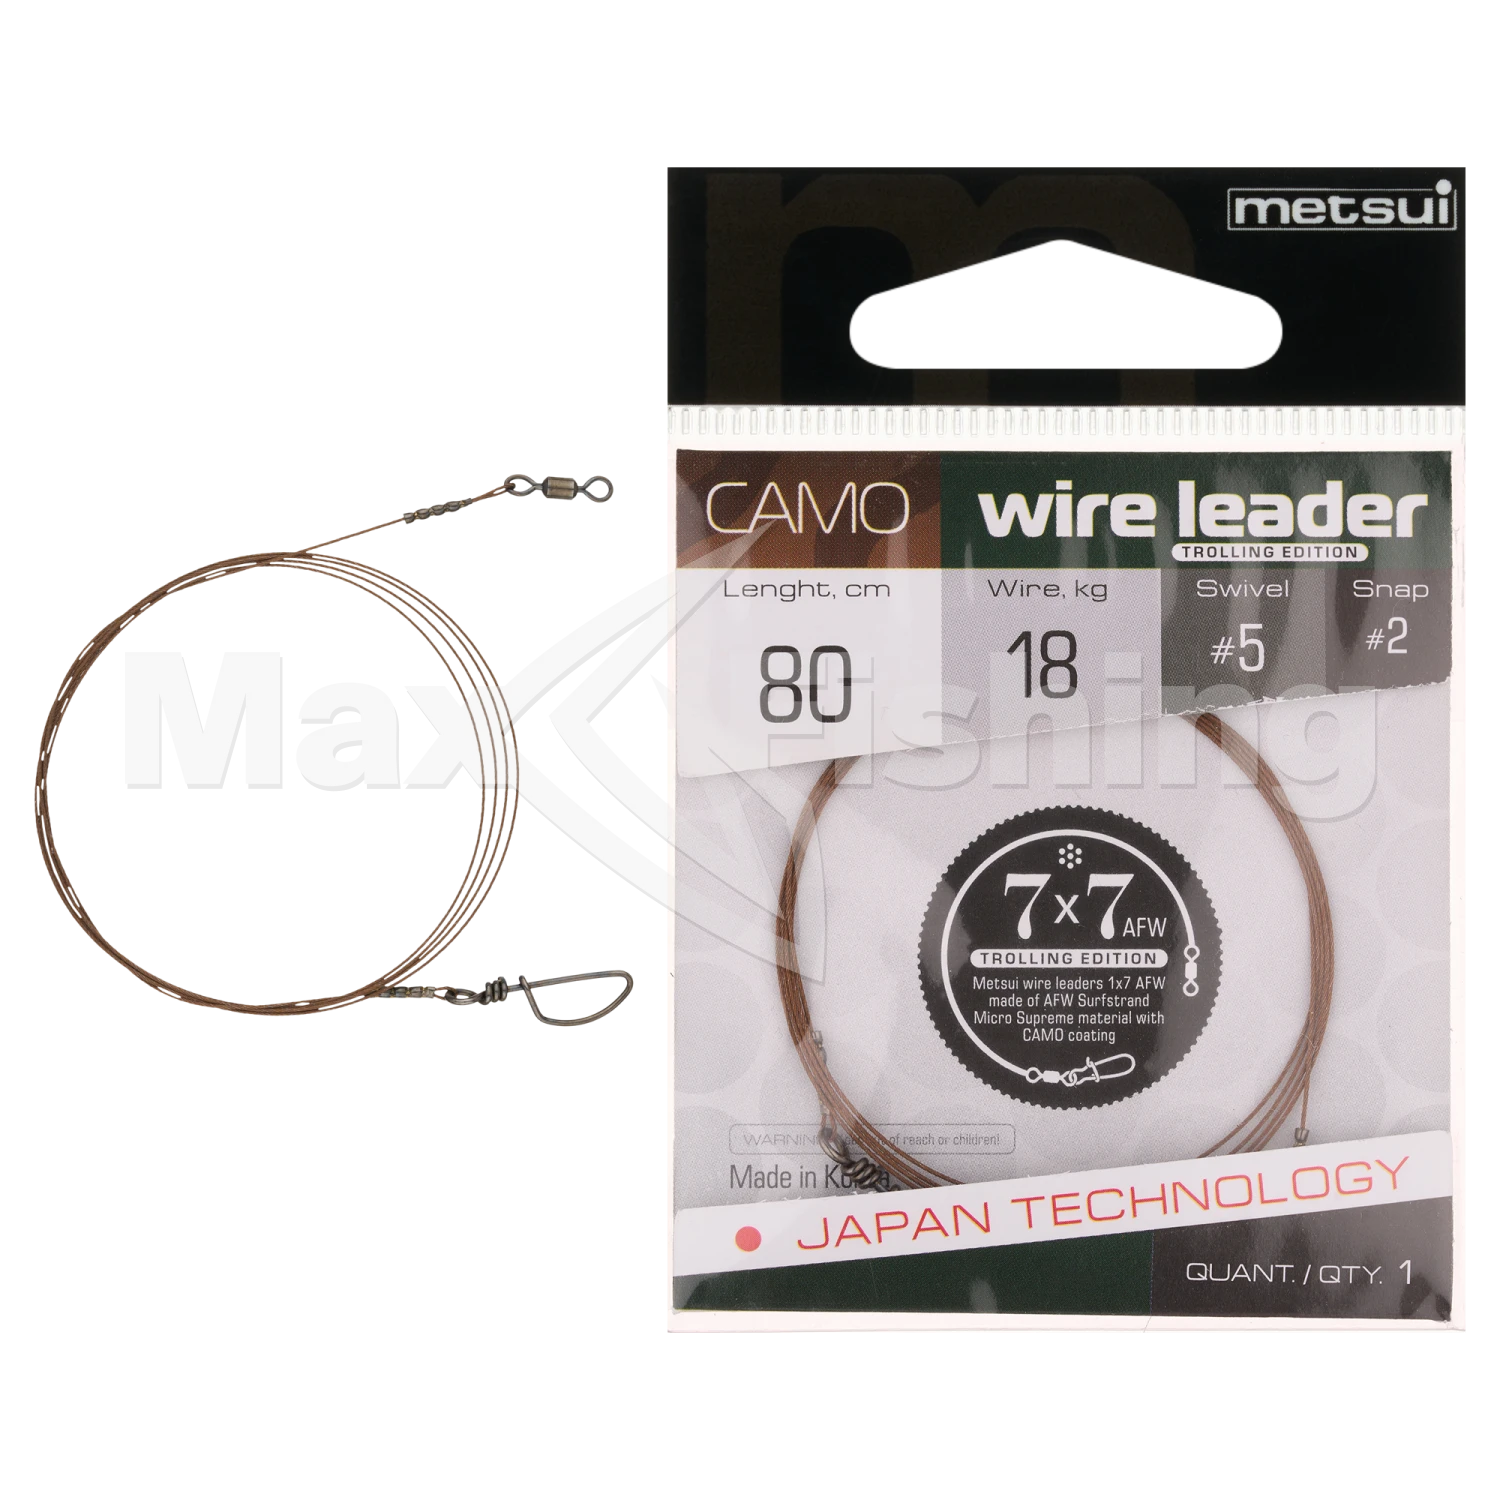 Поводок Metsui Camo Wire Leader AFW 7x7 18кг 80см